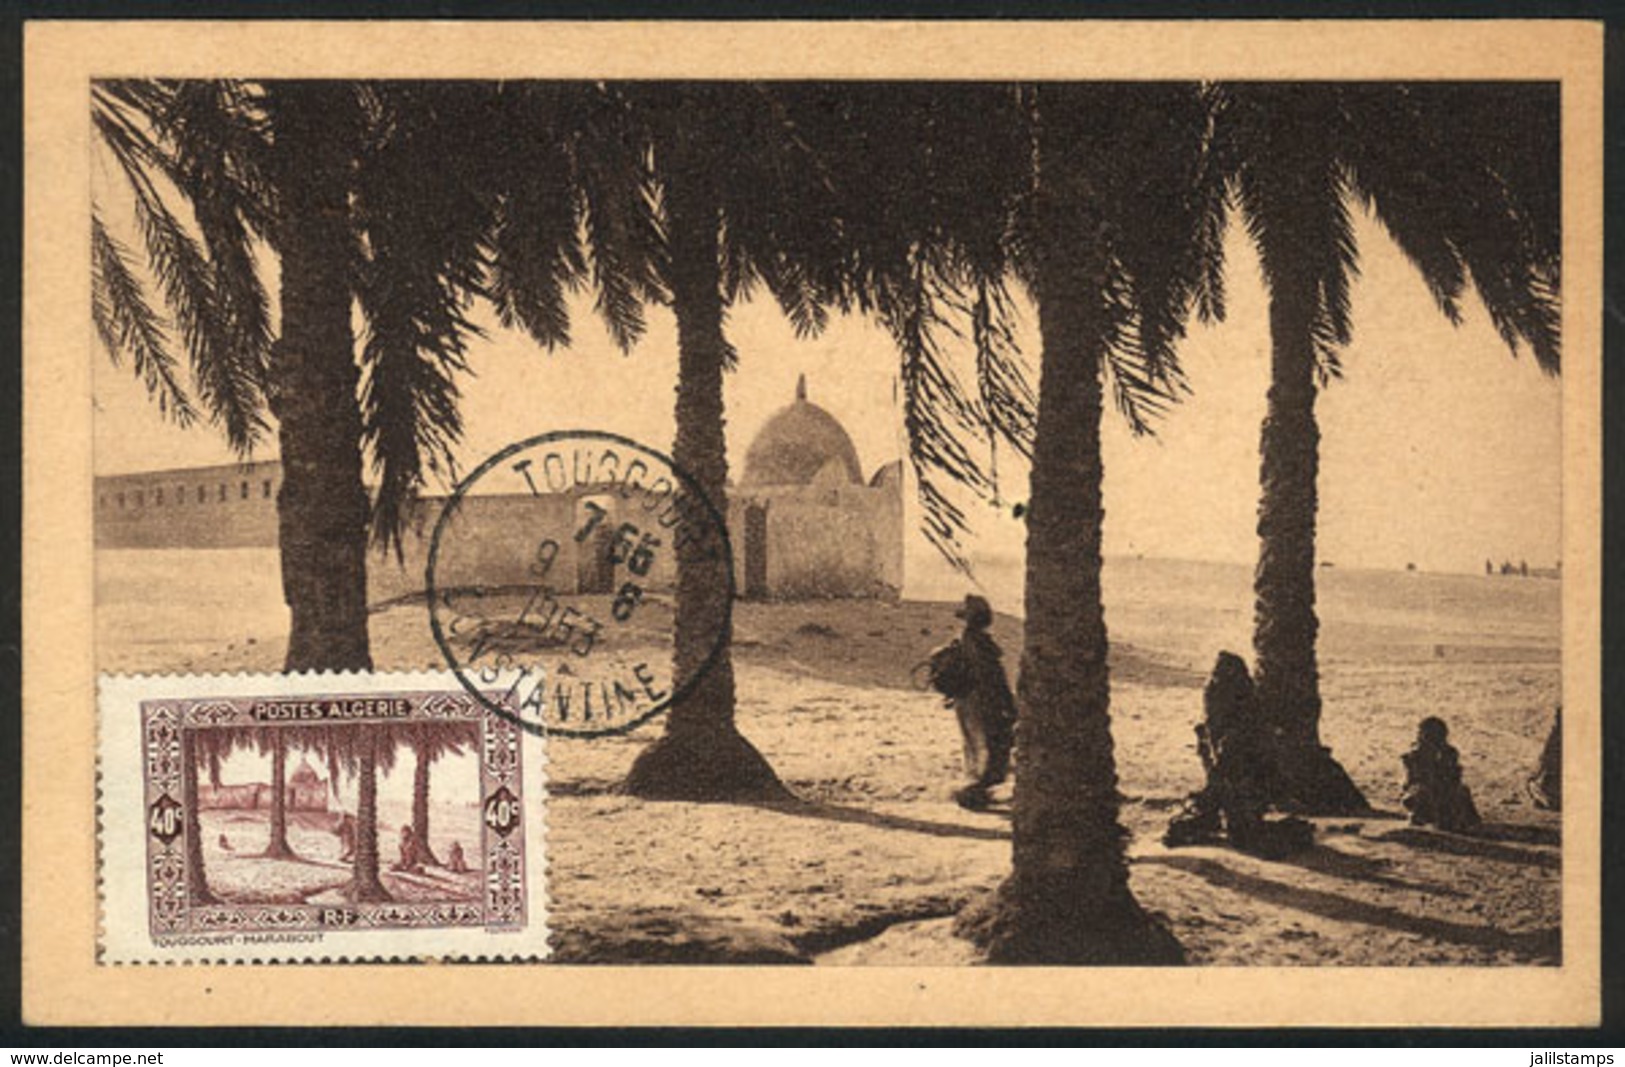 ALGERIA: TOUGGOURT: Tombs Of The Kings, Maximum Card Of 9/JUN/1953, VF Quality - Maximum Cards